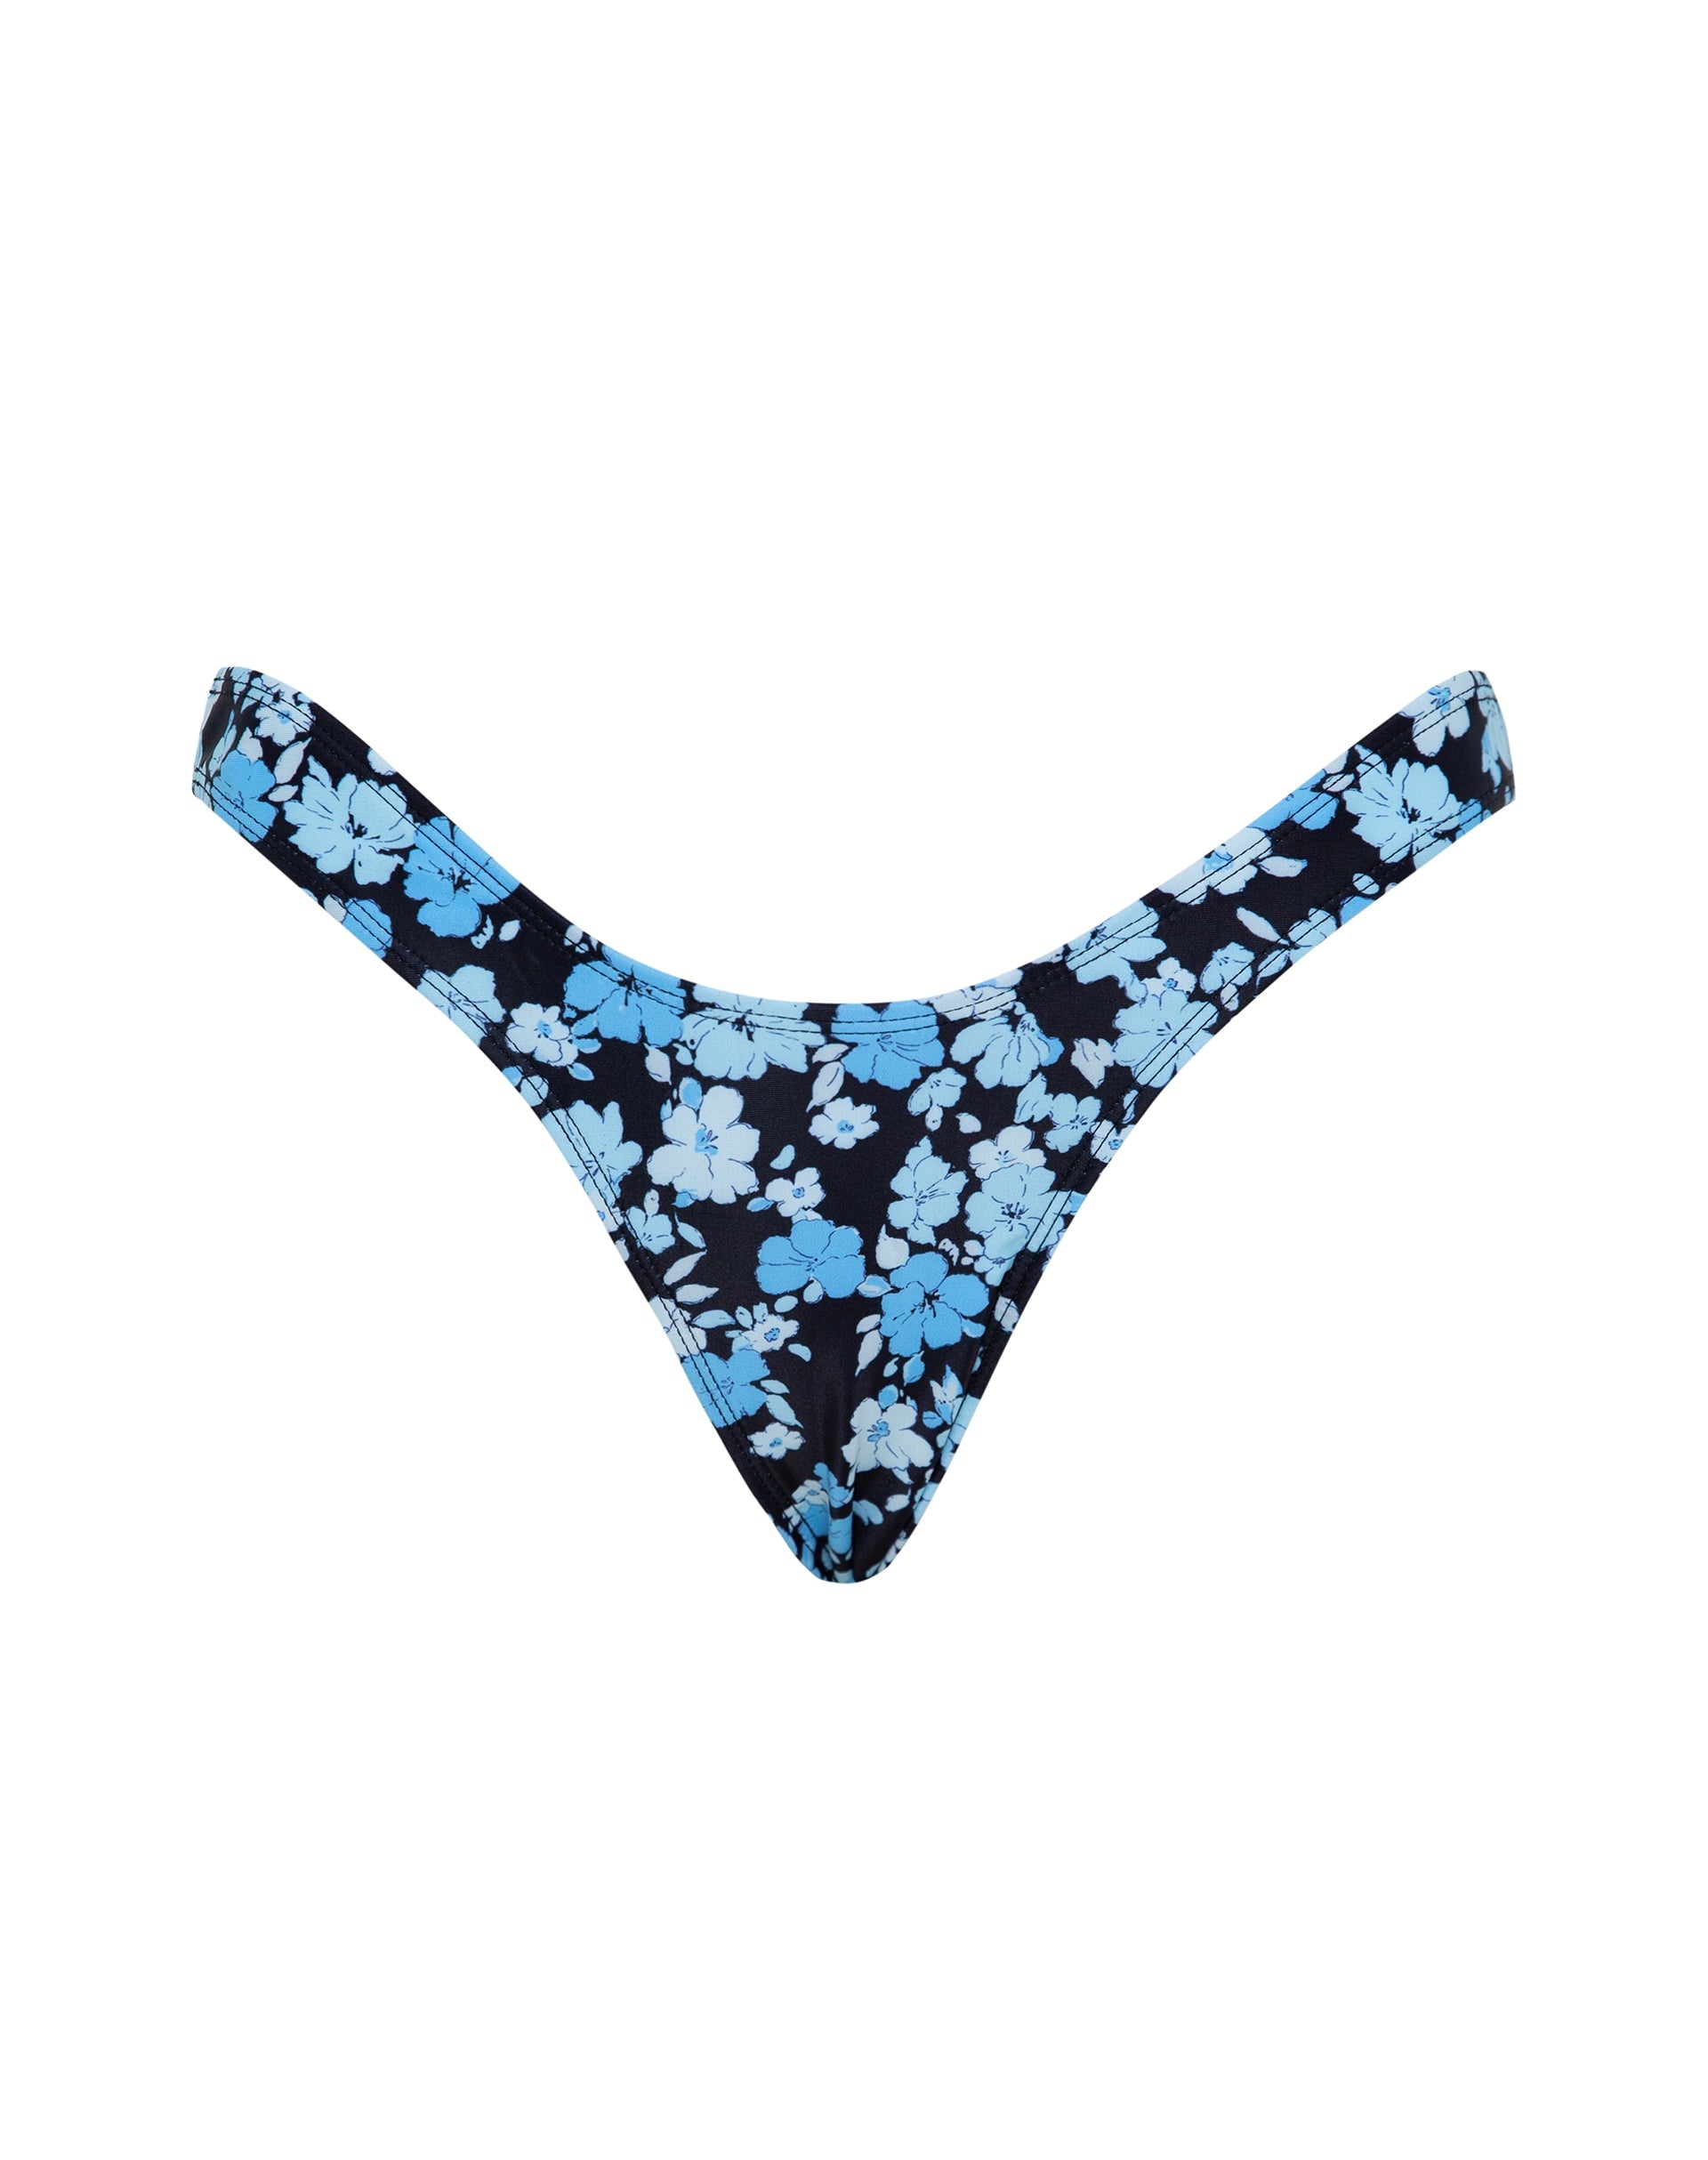 Image of Farida Bikini Bottom in Pastel Blue Floral